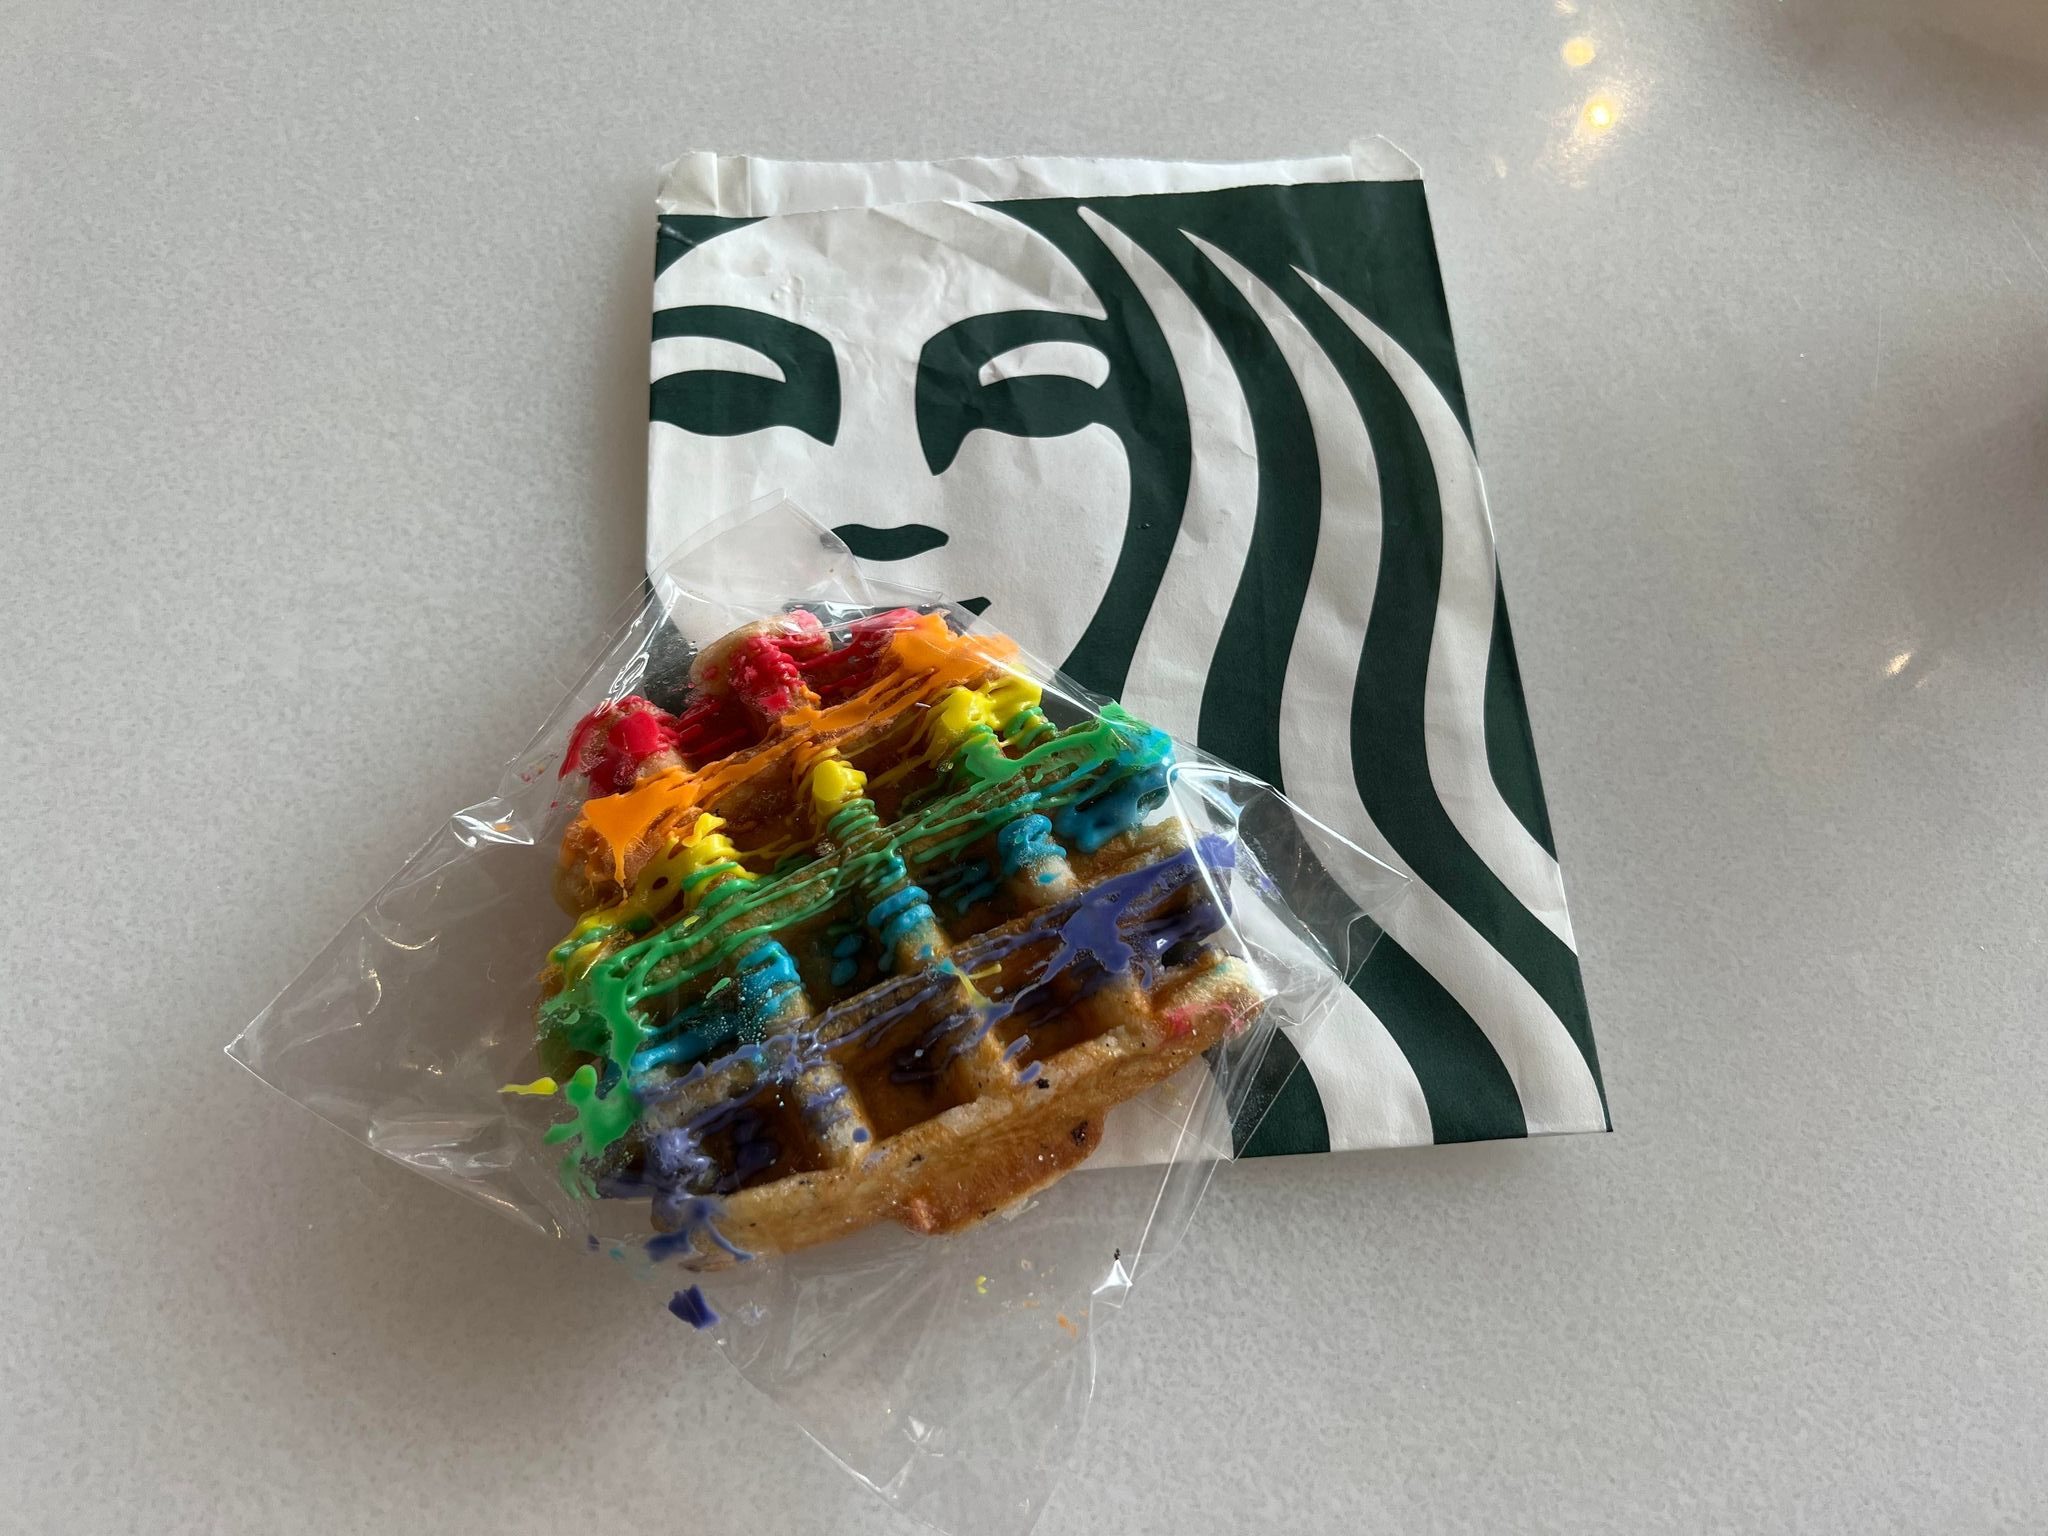 creations pride waffle